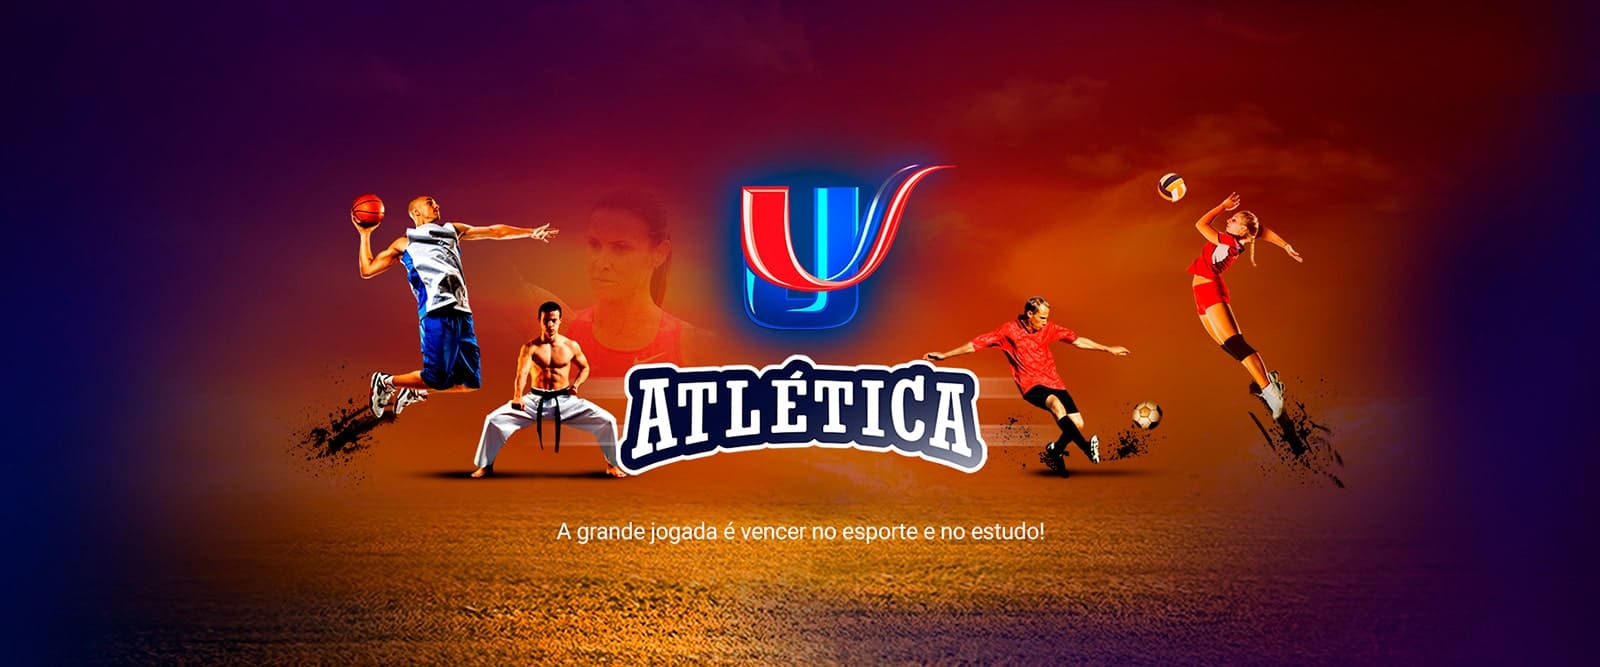 banner_atletica-1-1-min